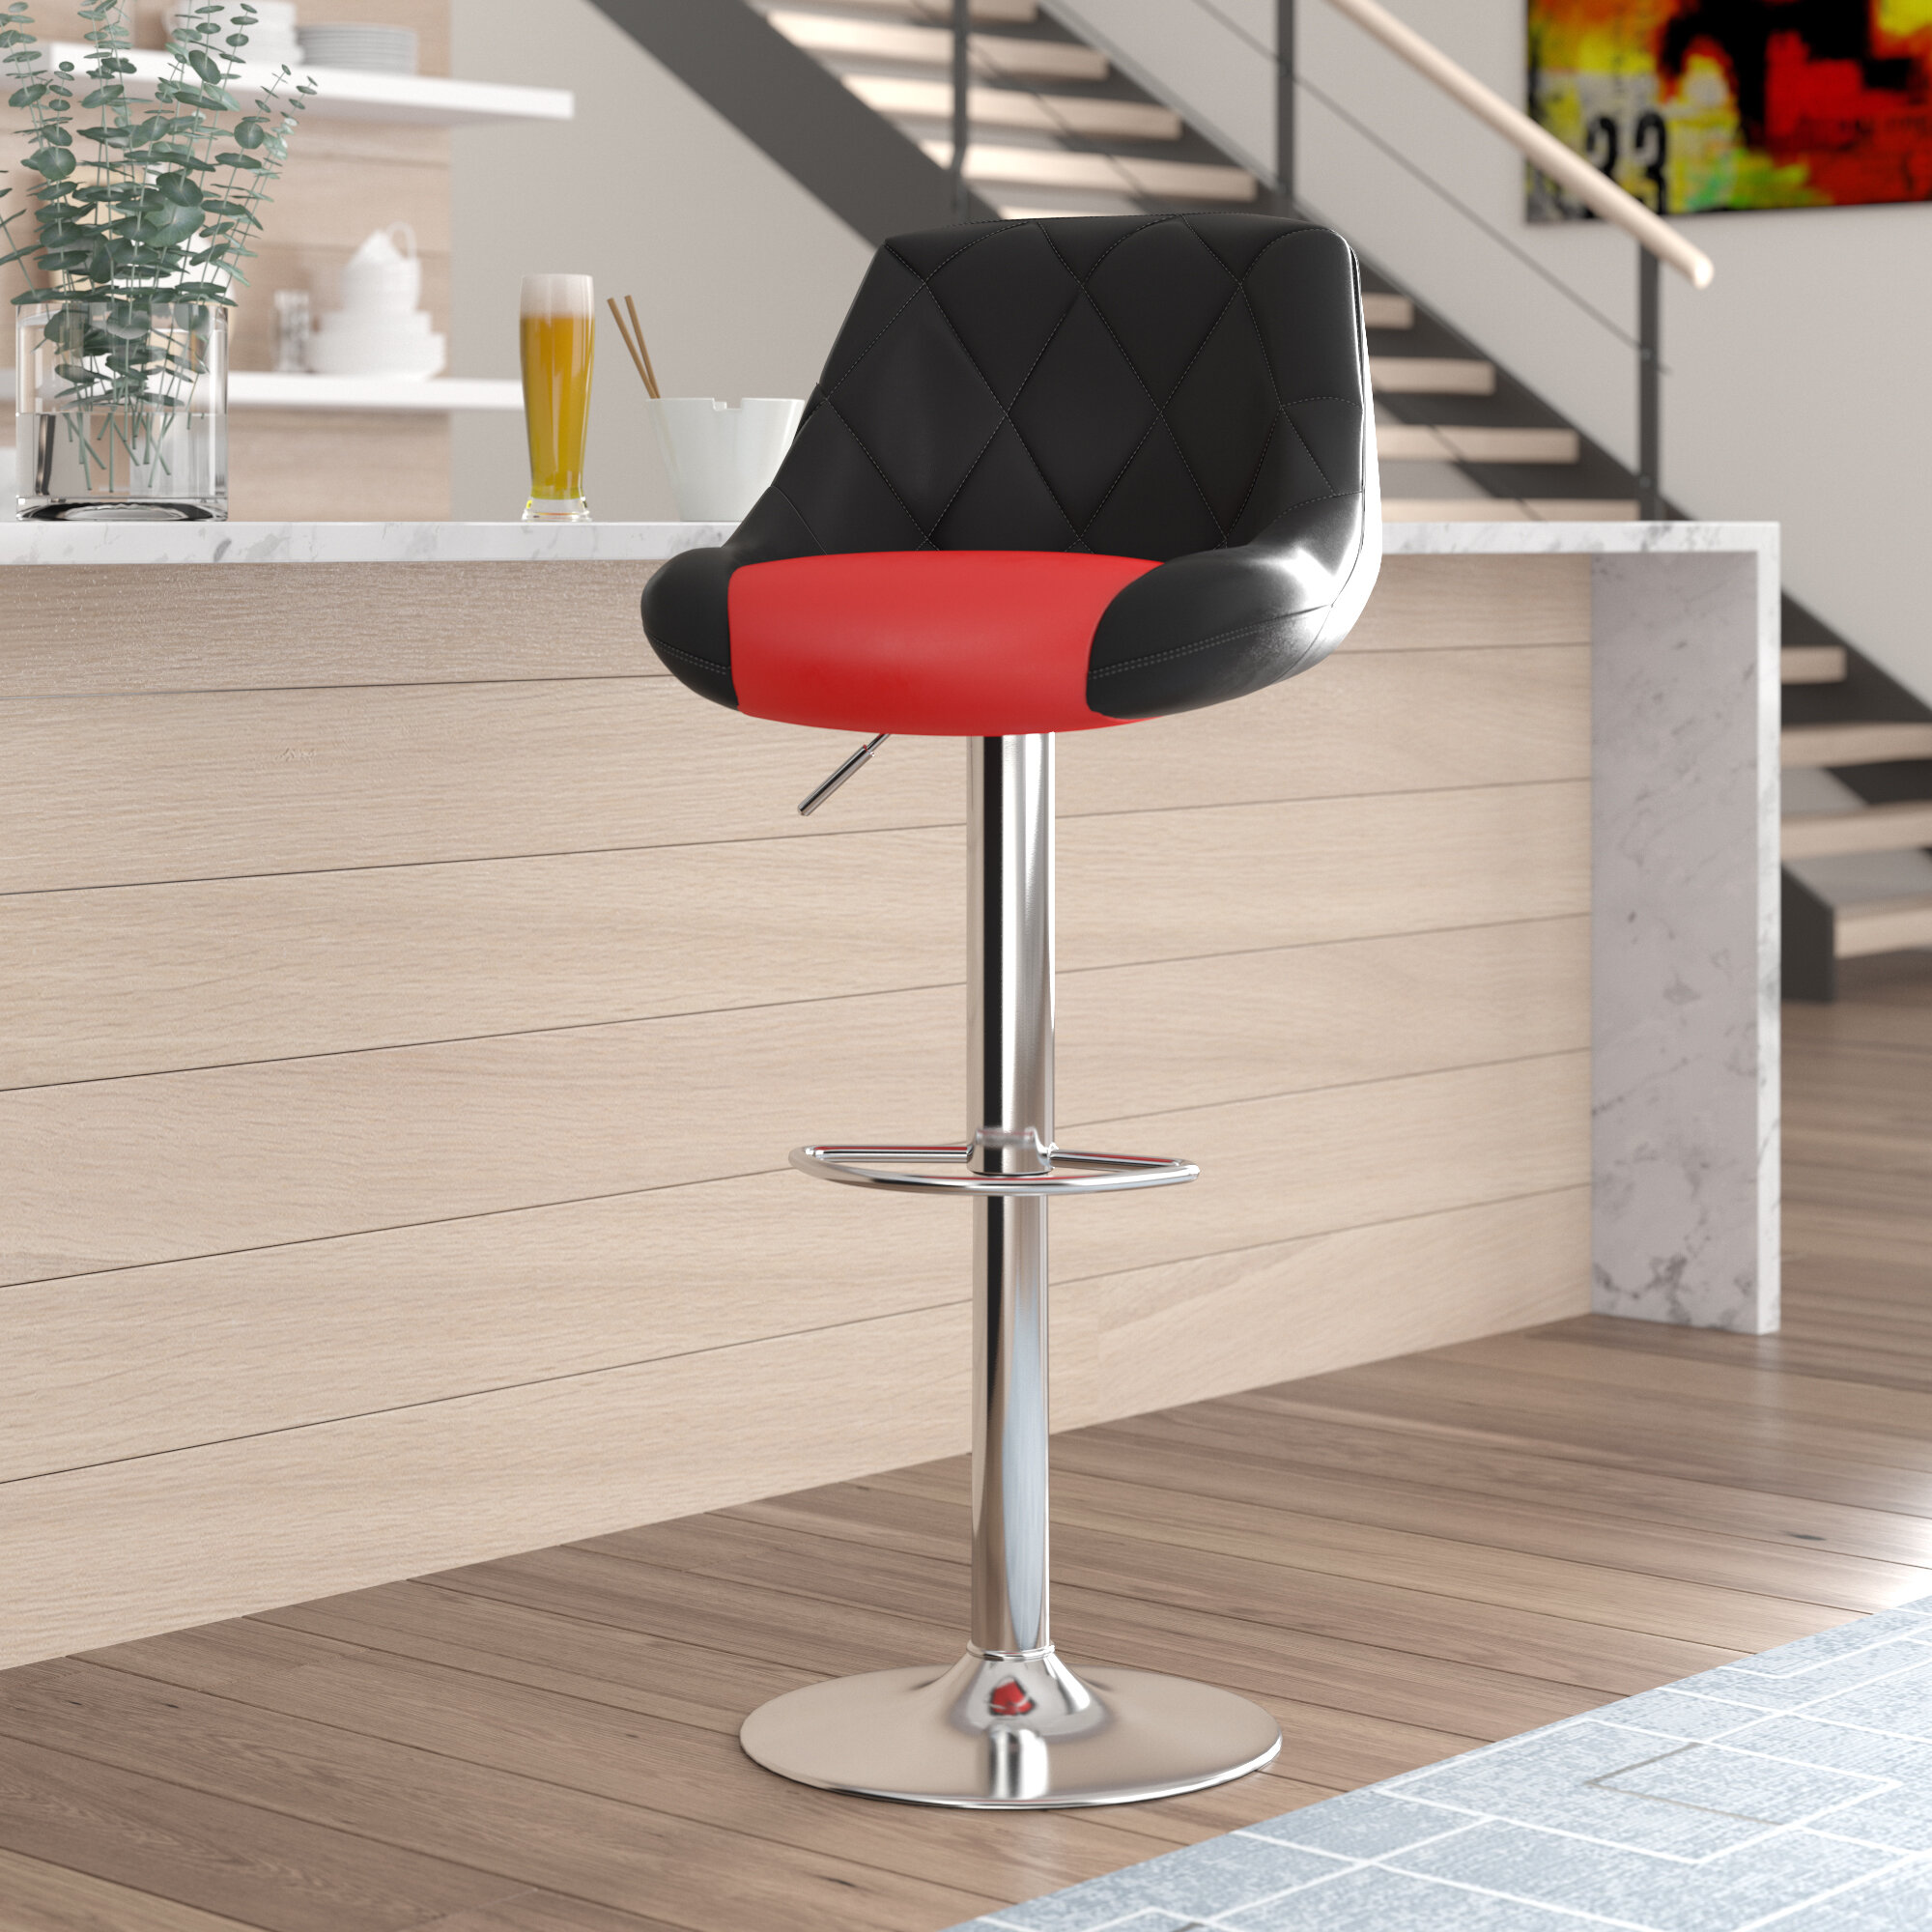 Model Bar Stool Chair Adjustable Swivel Dining Counter Bar Pub Set of 2 